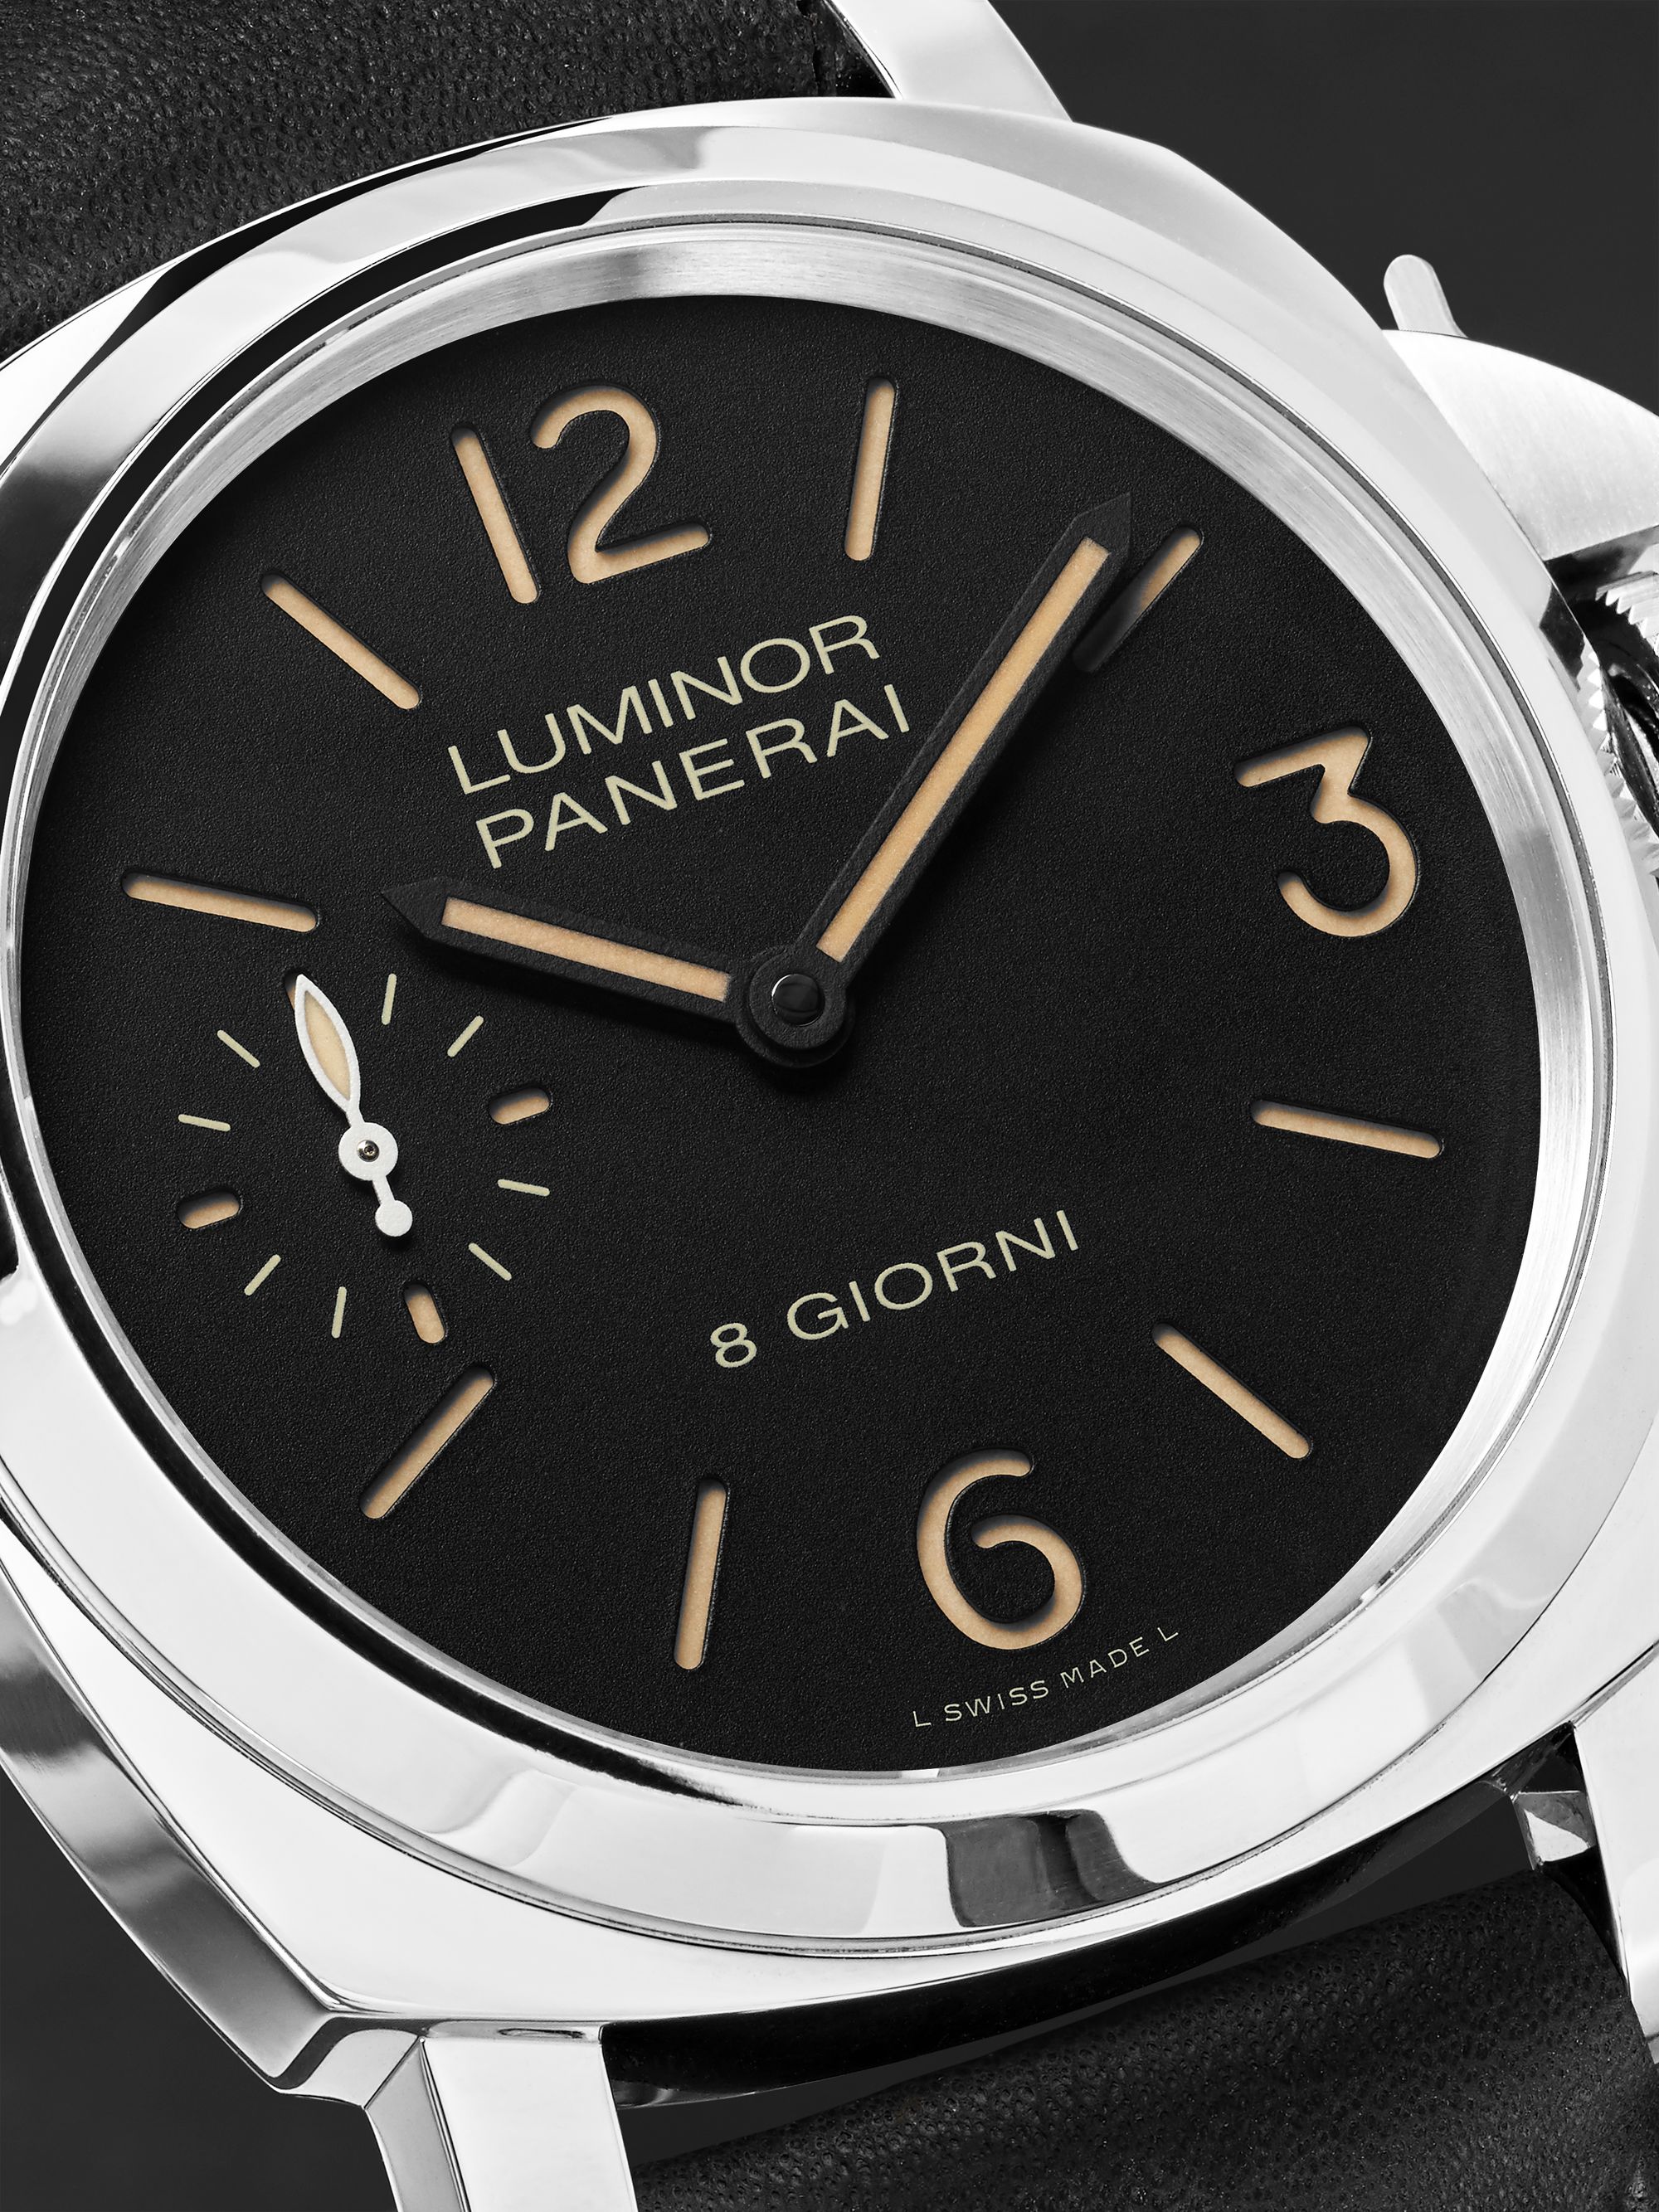 PANERAI Luminor Marina 8 Days Acciaio 44mm Stainless Steel and Leather Watch, Ref. No. PAM00510